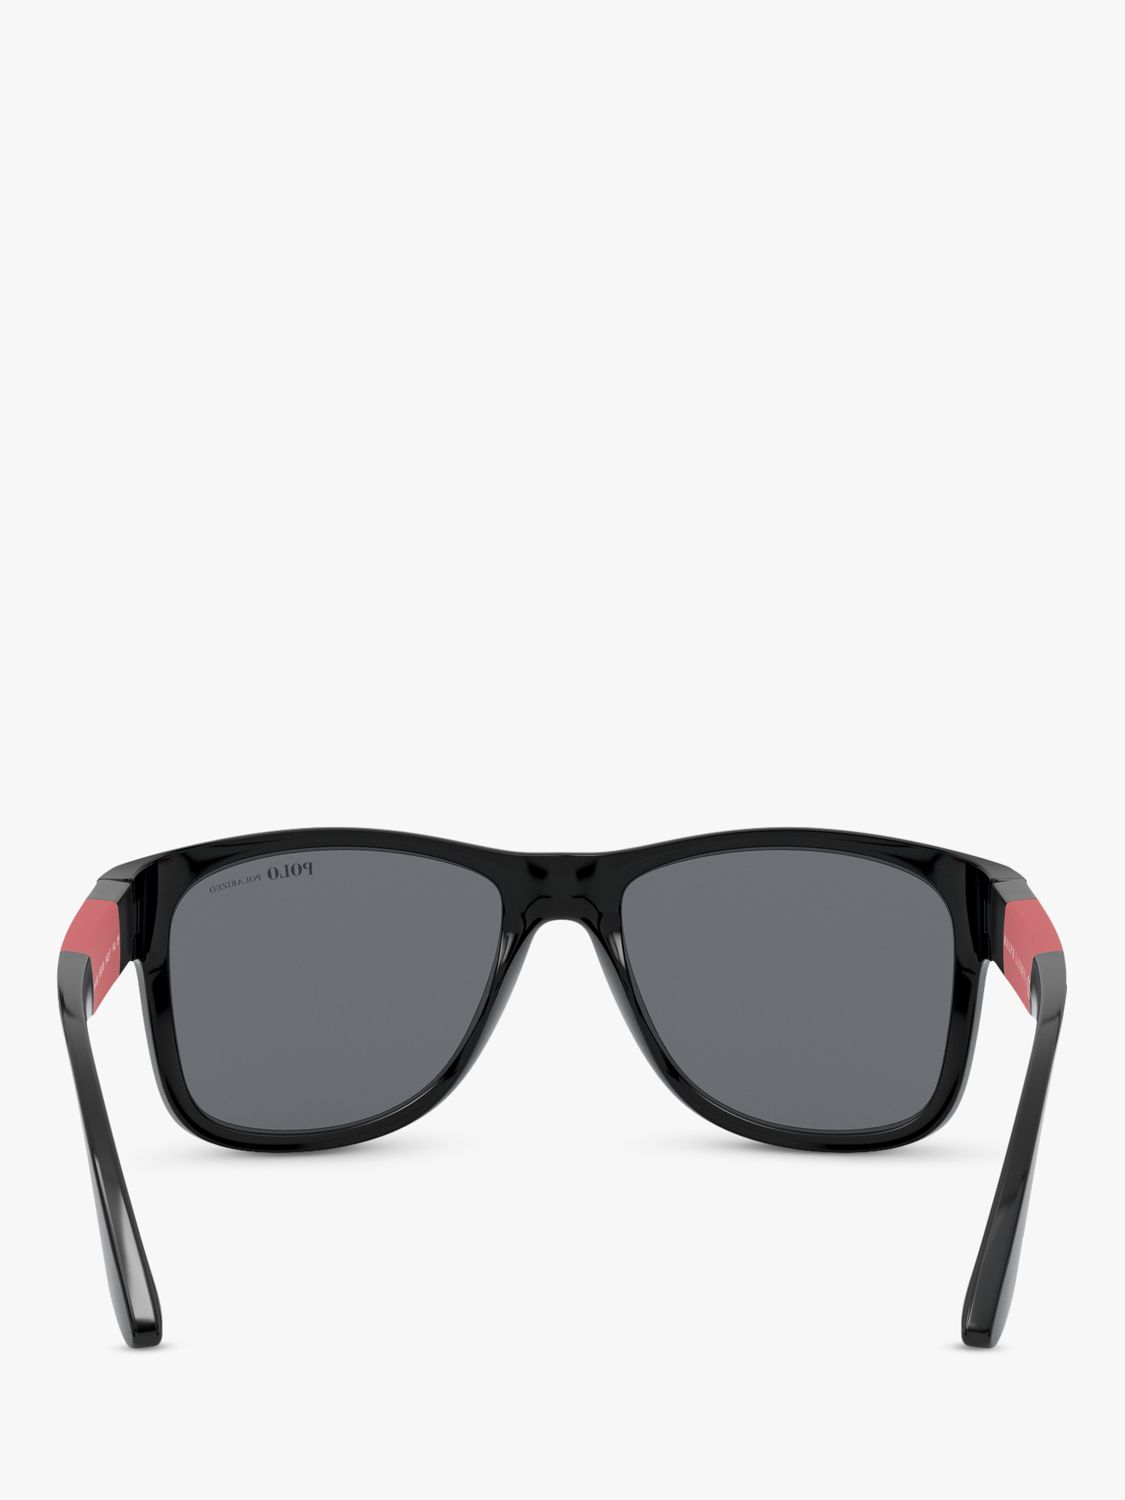 Ralph Lauren PH4162 Men's Square Sunglasses, Matte Black/Grey